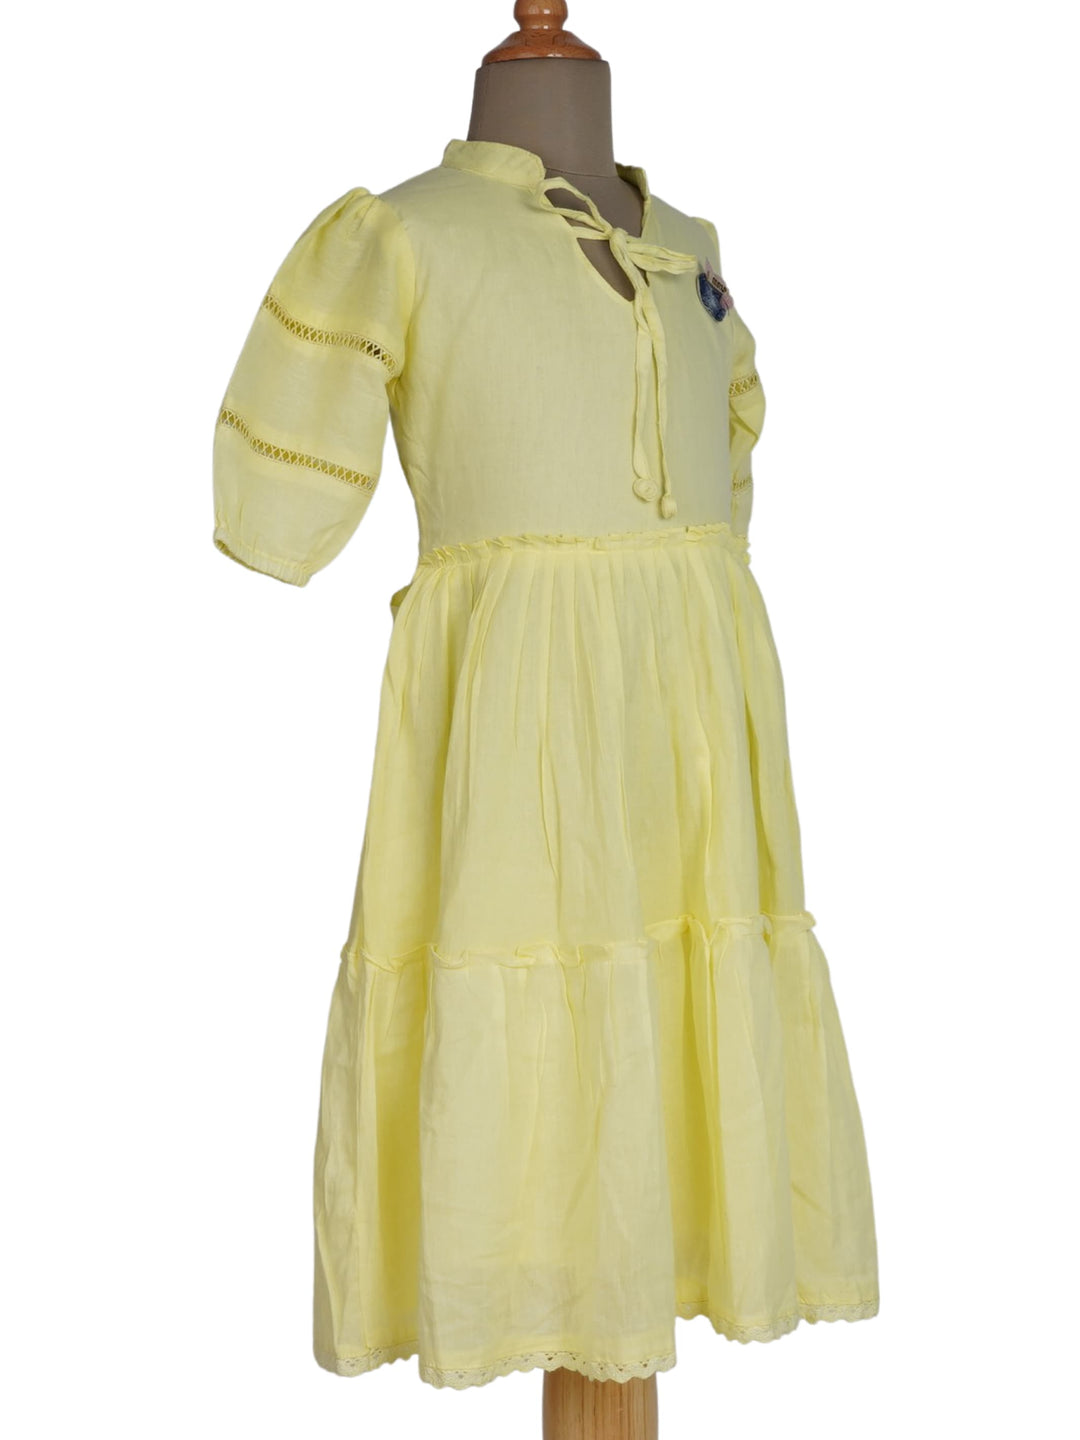 The Nesavu Frocks & Dresses Monochrome Cotton Wear For Girls With Tie-Up Mandarin Collar psr silks Nesavu